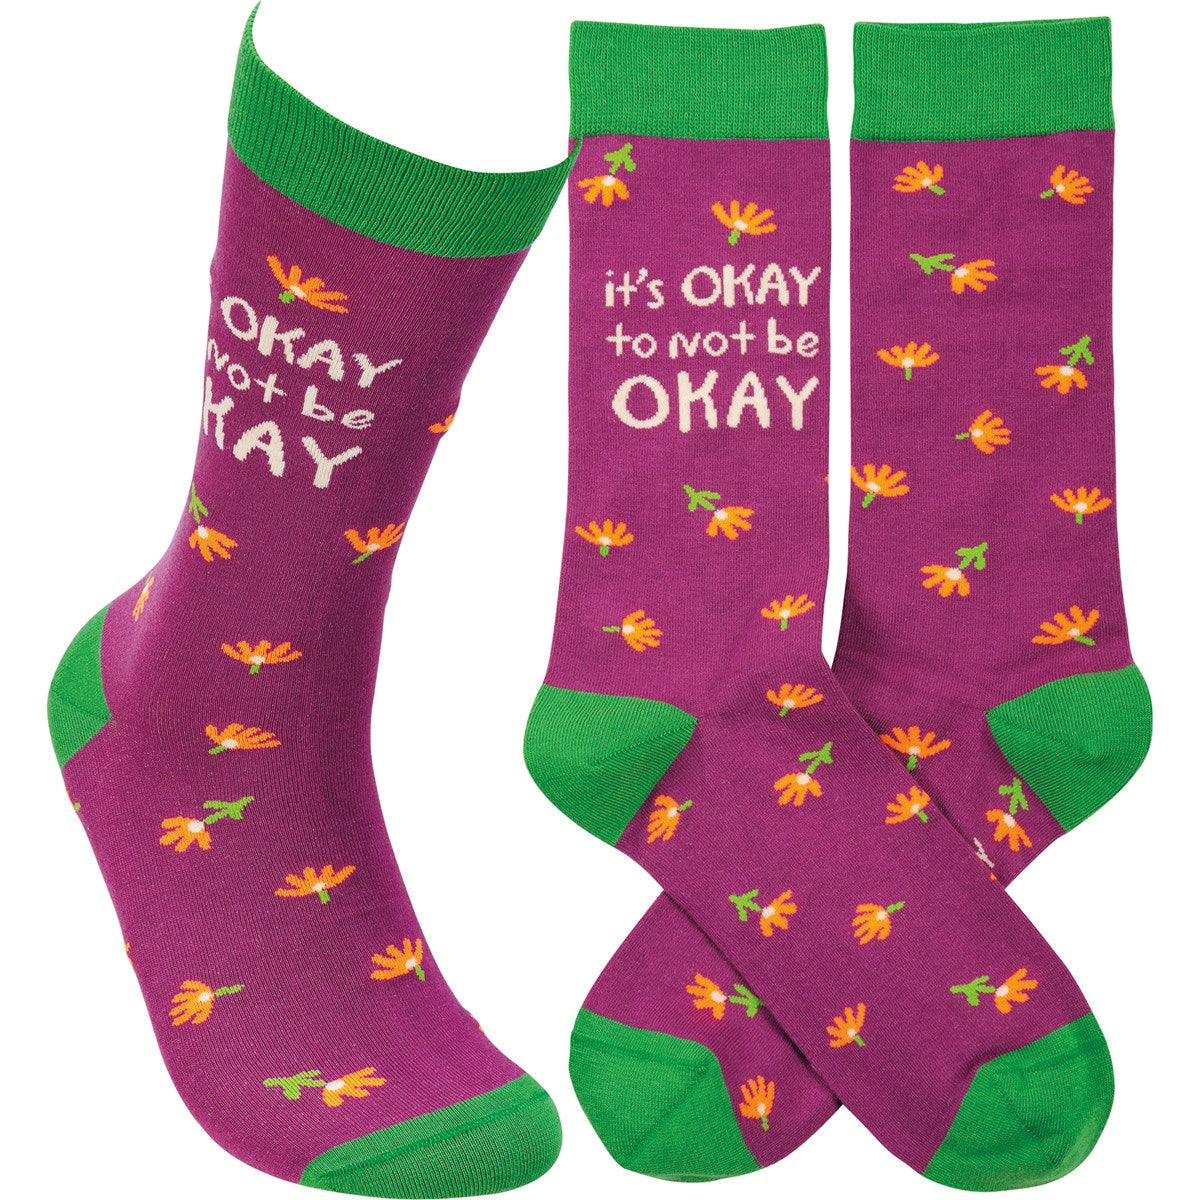 Socks - "It's Okay To Not Be Okay"